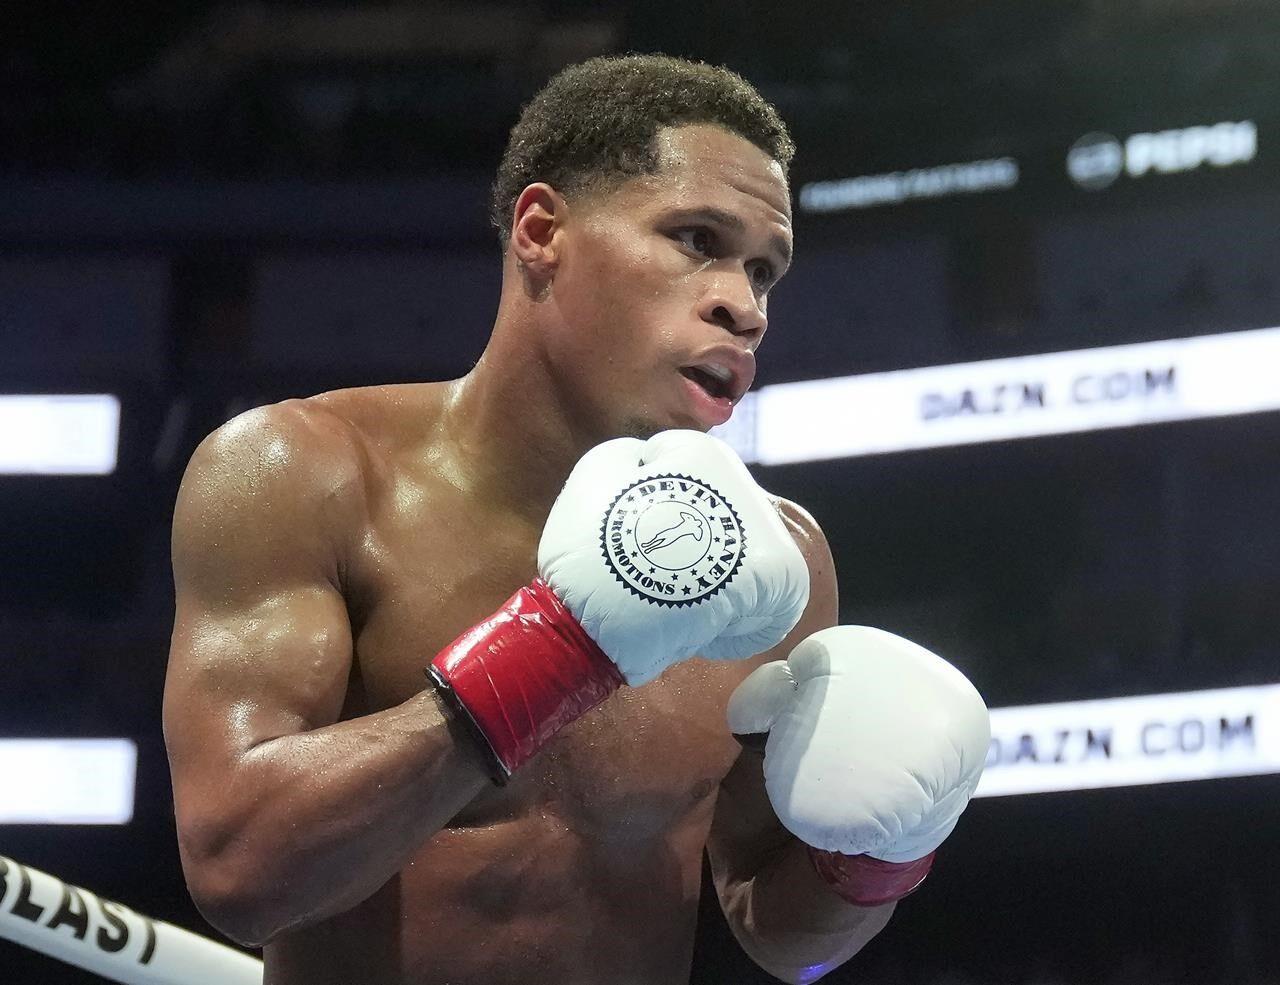 Boxer Ryan Garcia denies using performance-enhancing drugs after beating Devin Haney - Discussion on the use of performance-enhancing drugs in boxing